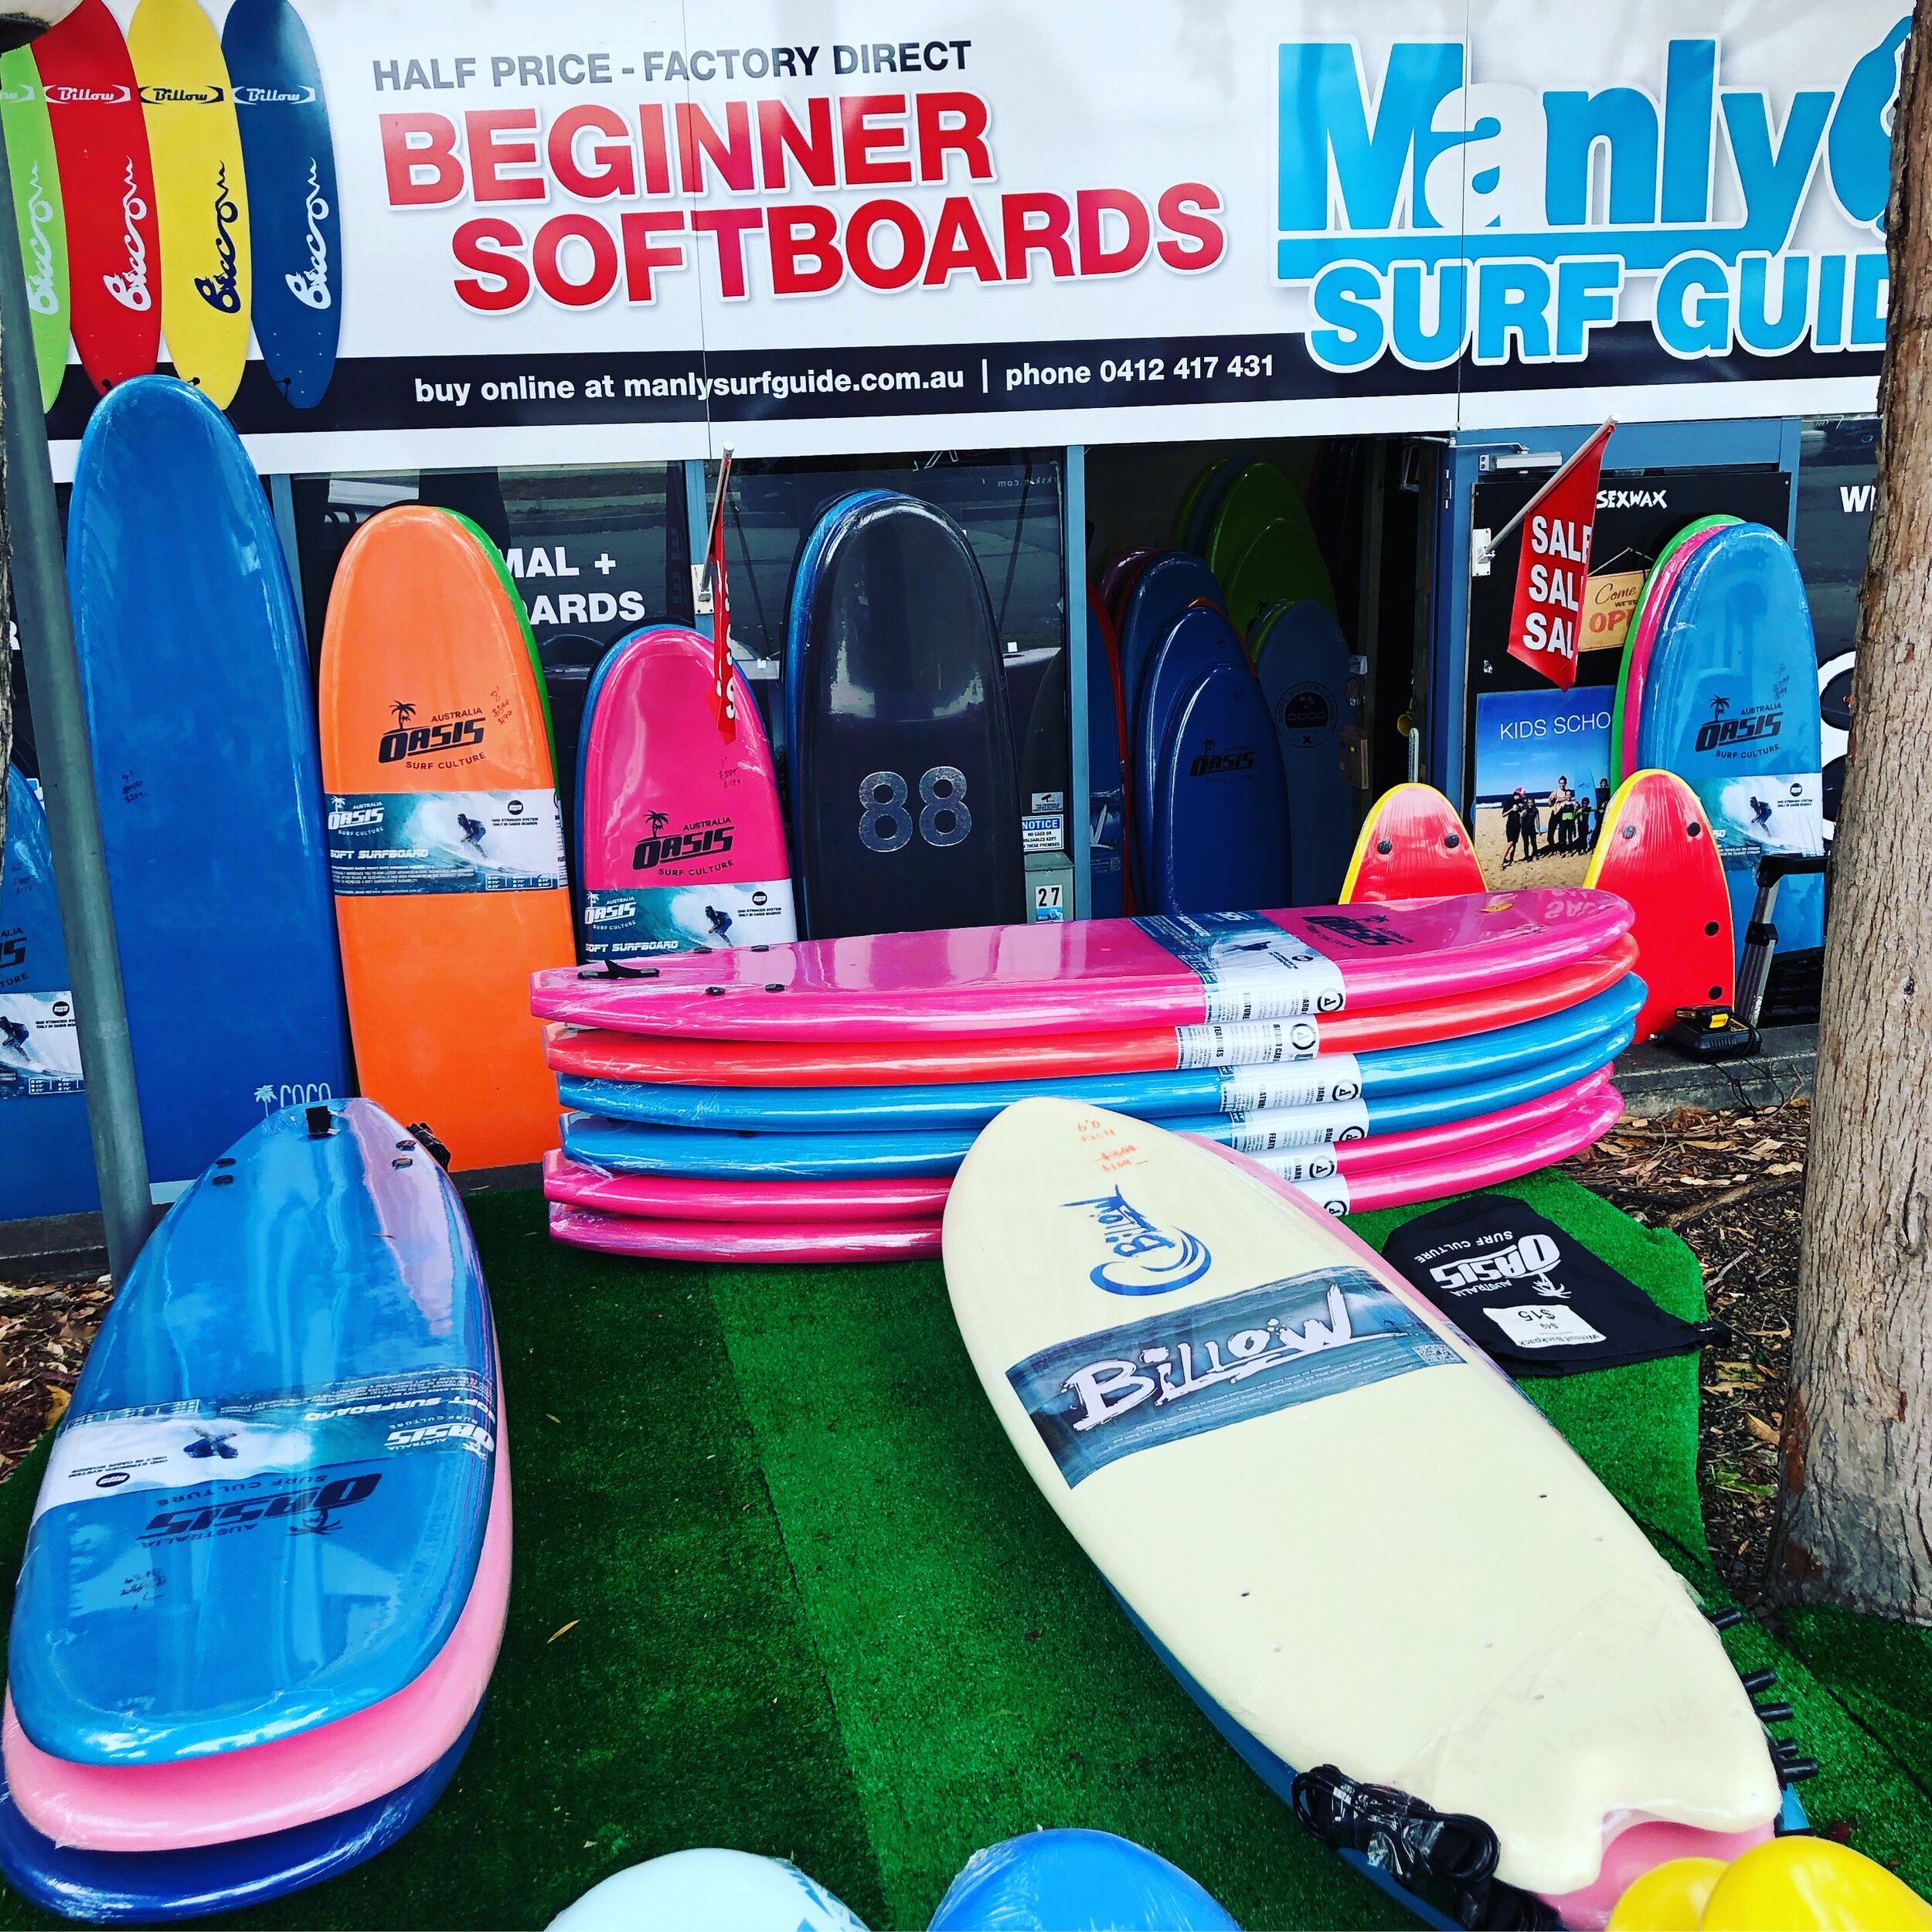 7ft Foamy Surfboard 6ft 8ft Beginner Surfboards with Travel Boardbag 